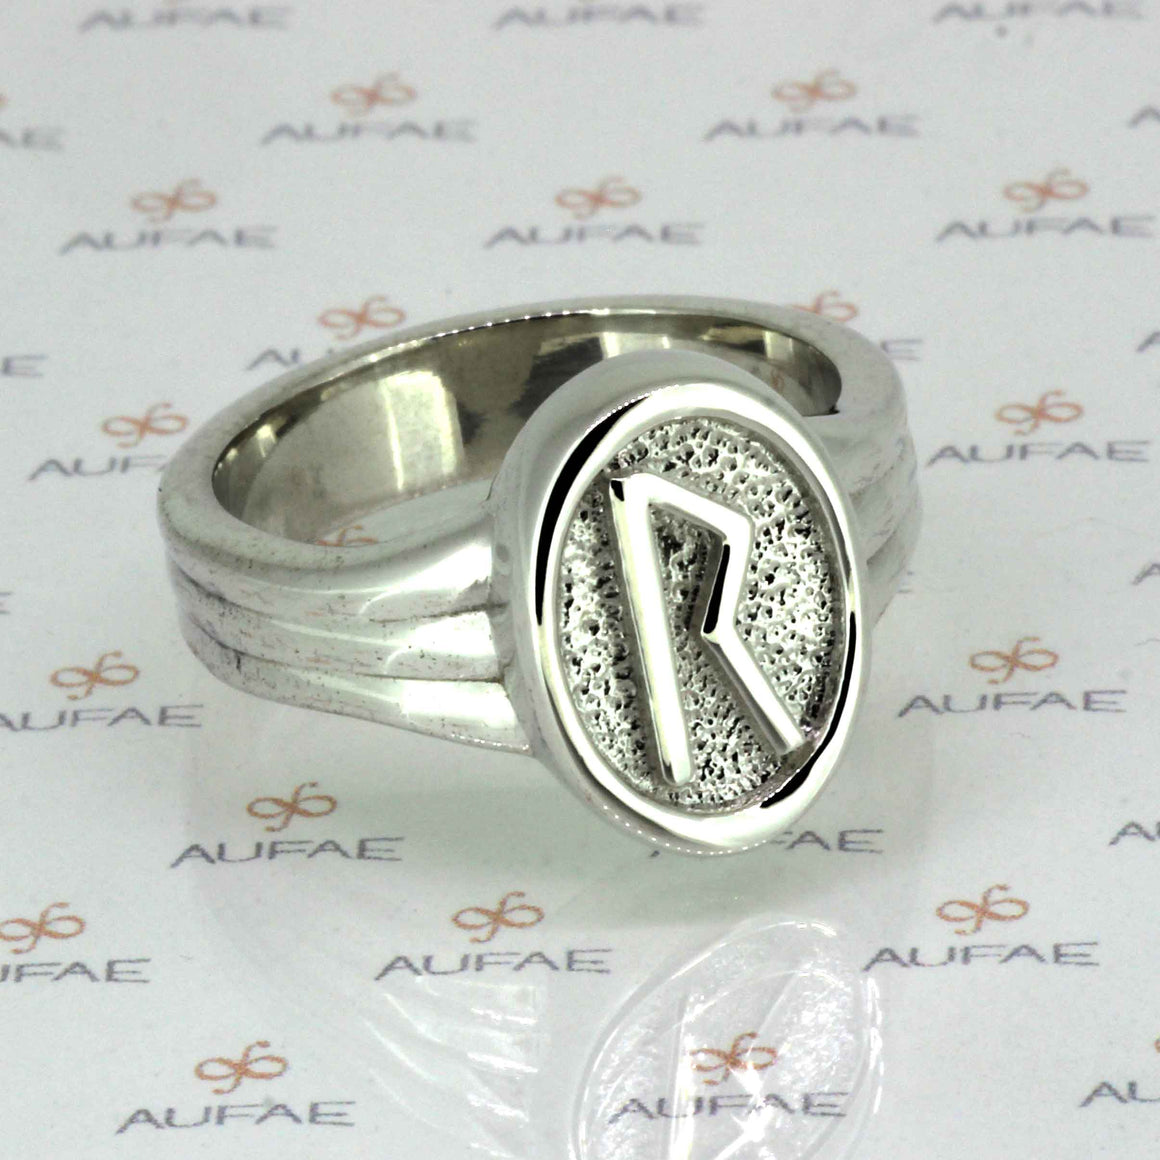 Aufae Raido Rune ring in Sterling Silver